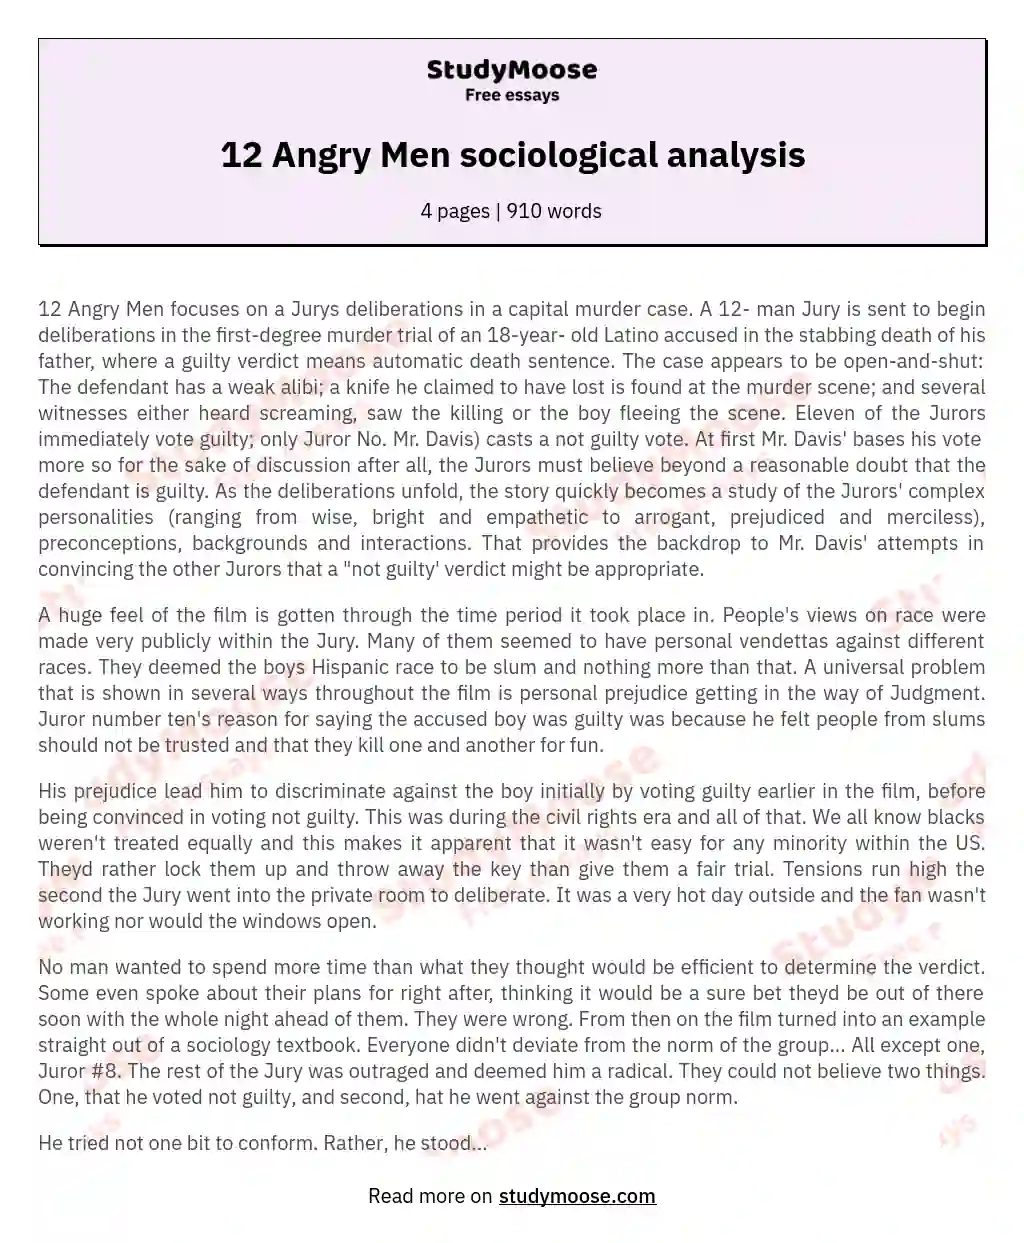 12 Angry Men sociological analysis